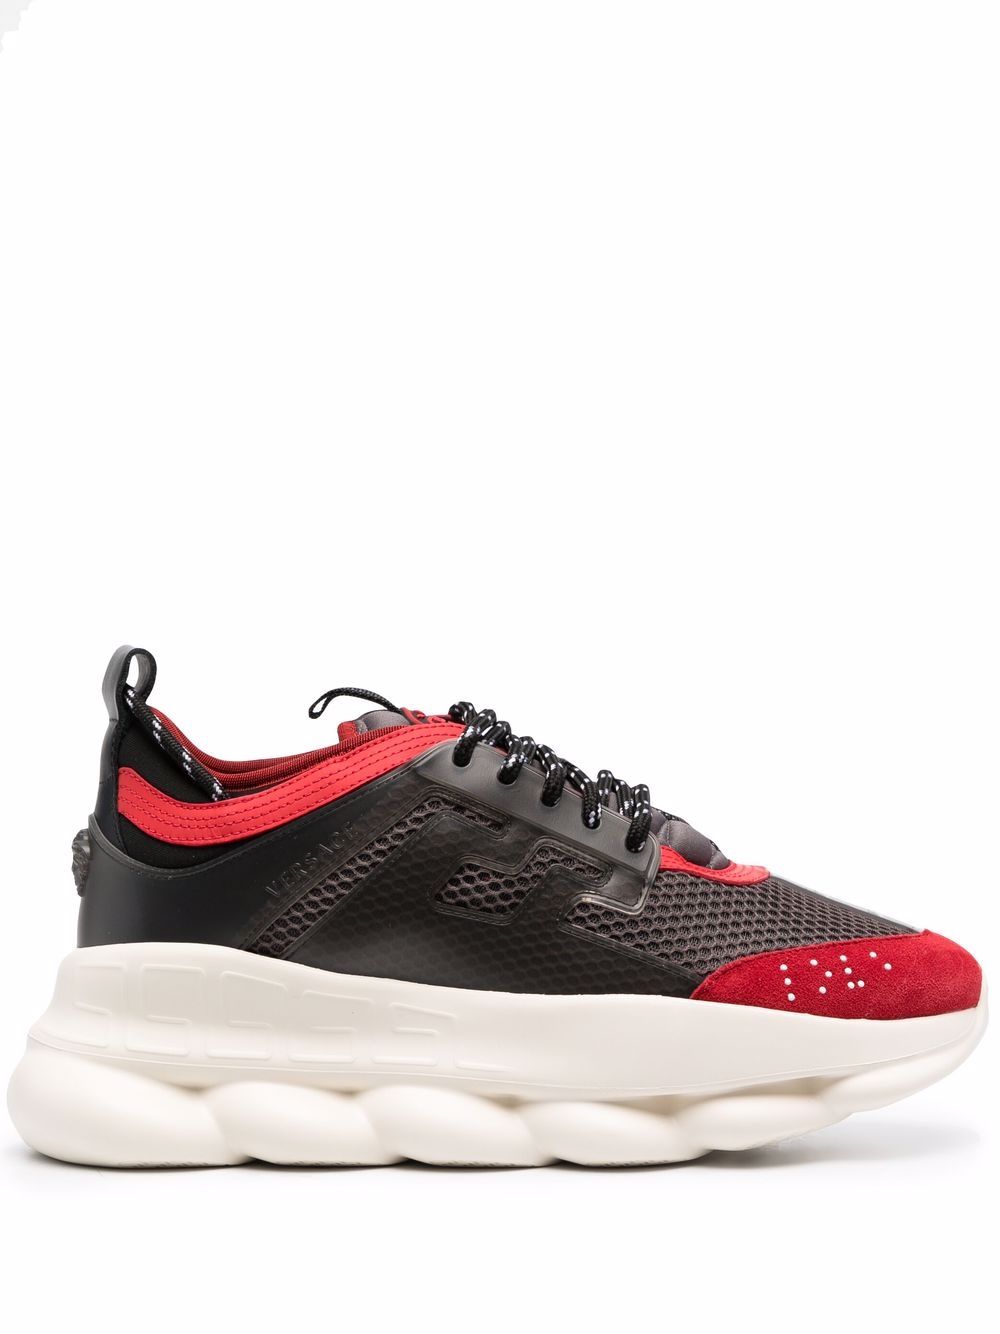 Versace Chain Reaction Sneakers, $845, farfetch.com